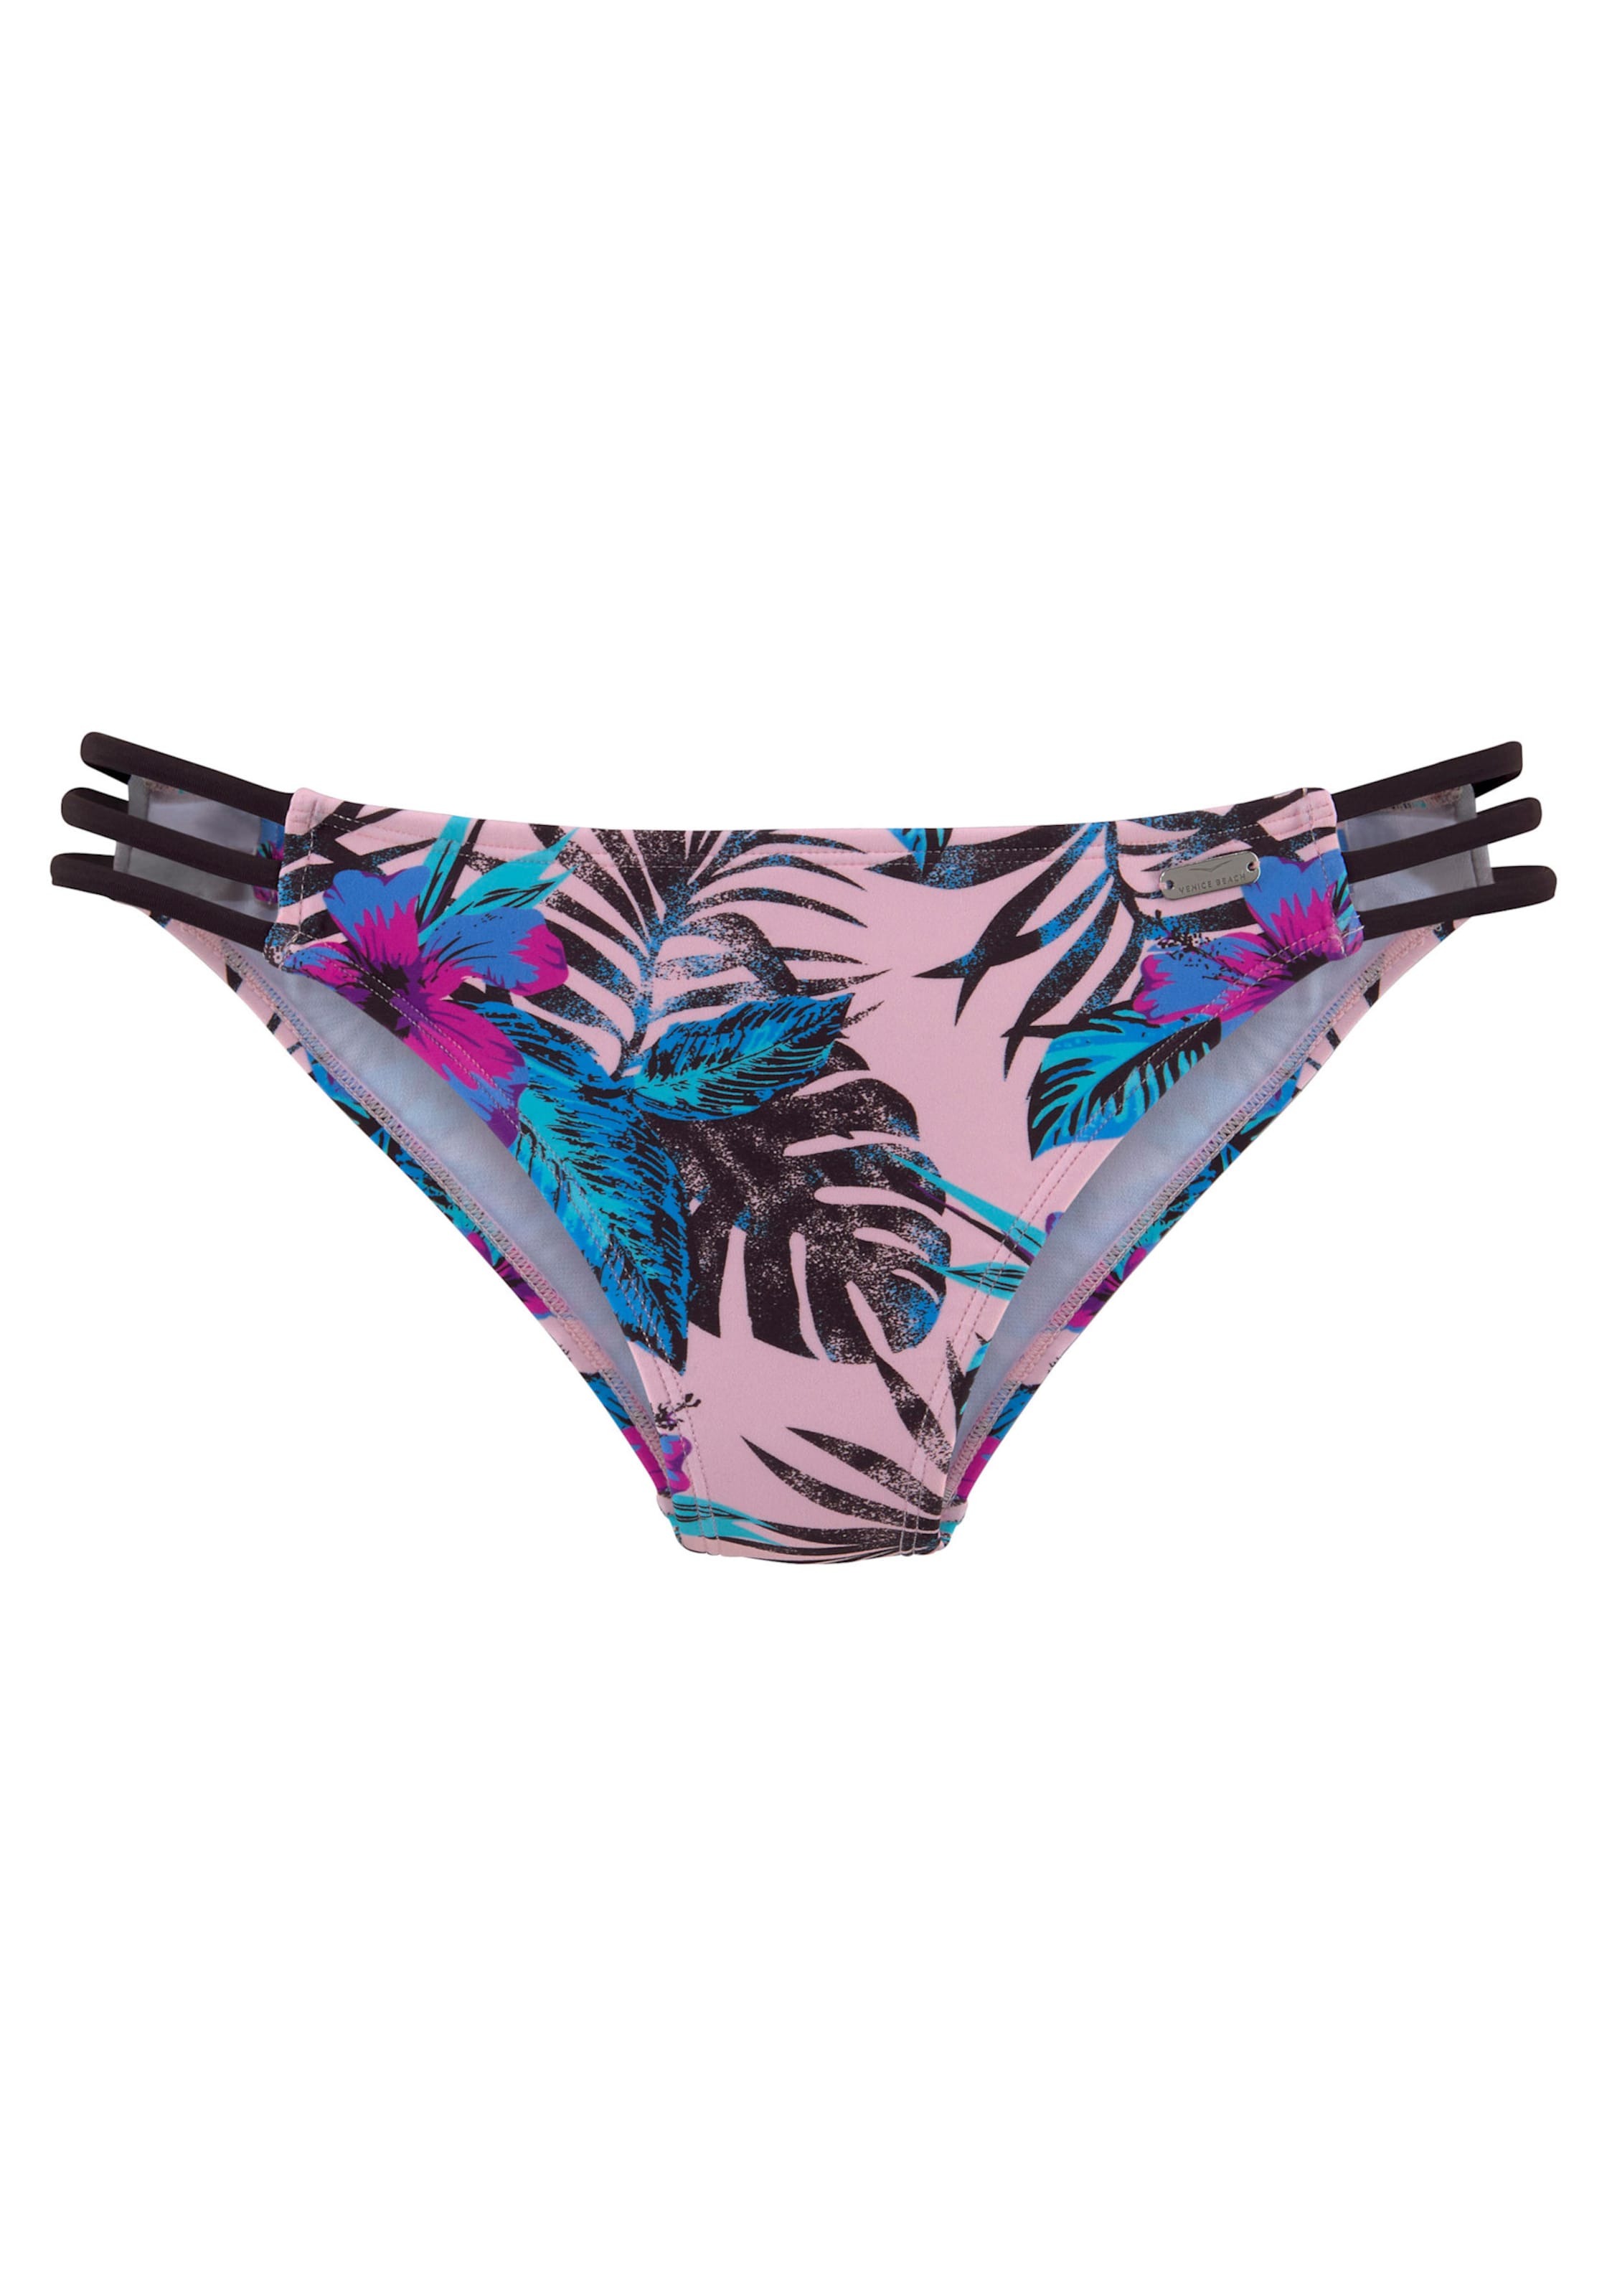 100 XTRA günstig Kaufen-Bikini-Hose in rosa-bedruckt von Venice Beach. Bikini-Hose in rosa-bedruckt von Venice Beach <![CDATA[Bikini-Hose mit seitlichen Bändern von Venice Beach. Florales Design. Obermaterial: 80% Polyamid, 20% Elasthan LYCRA® XTRA LIFE™. Futter: 100% Polyes